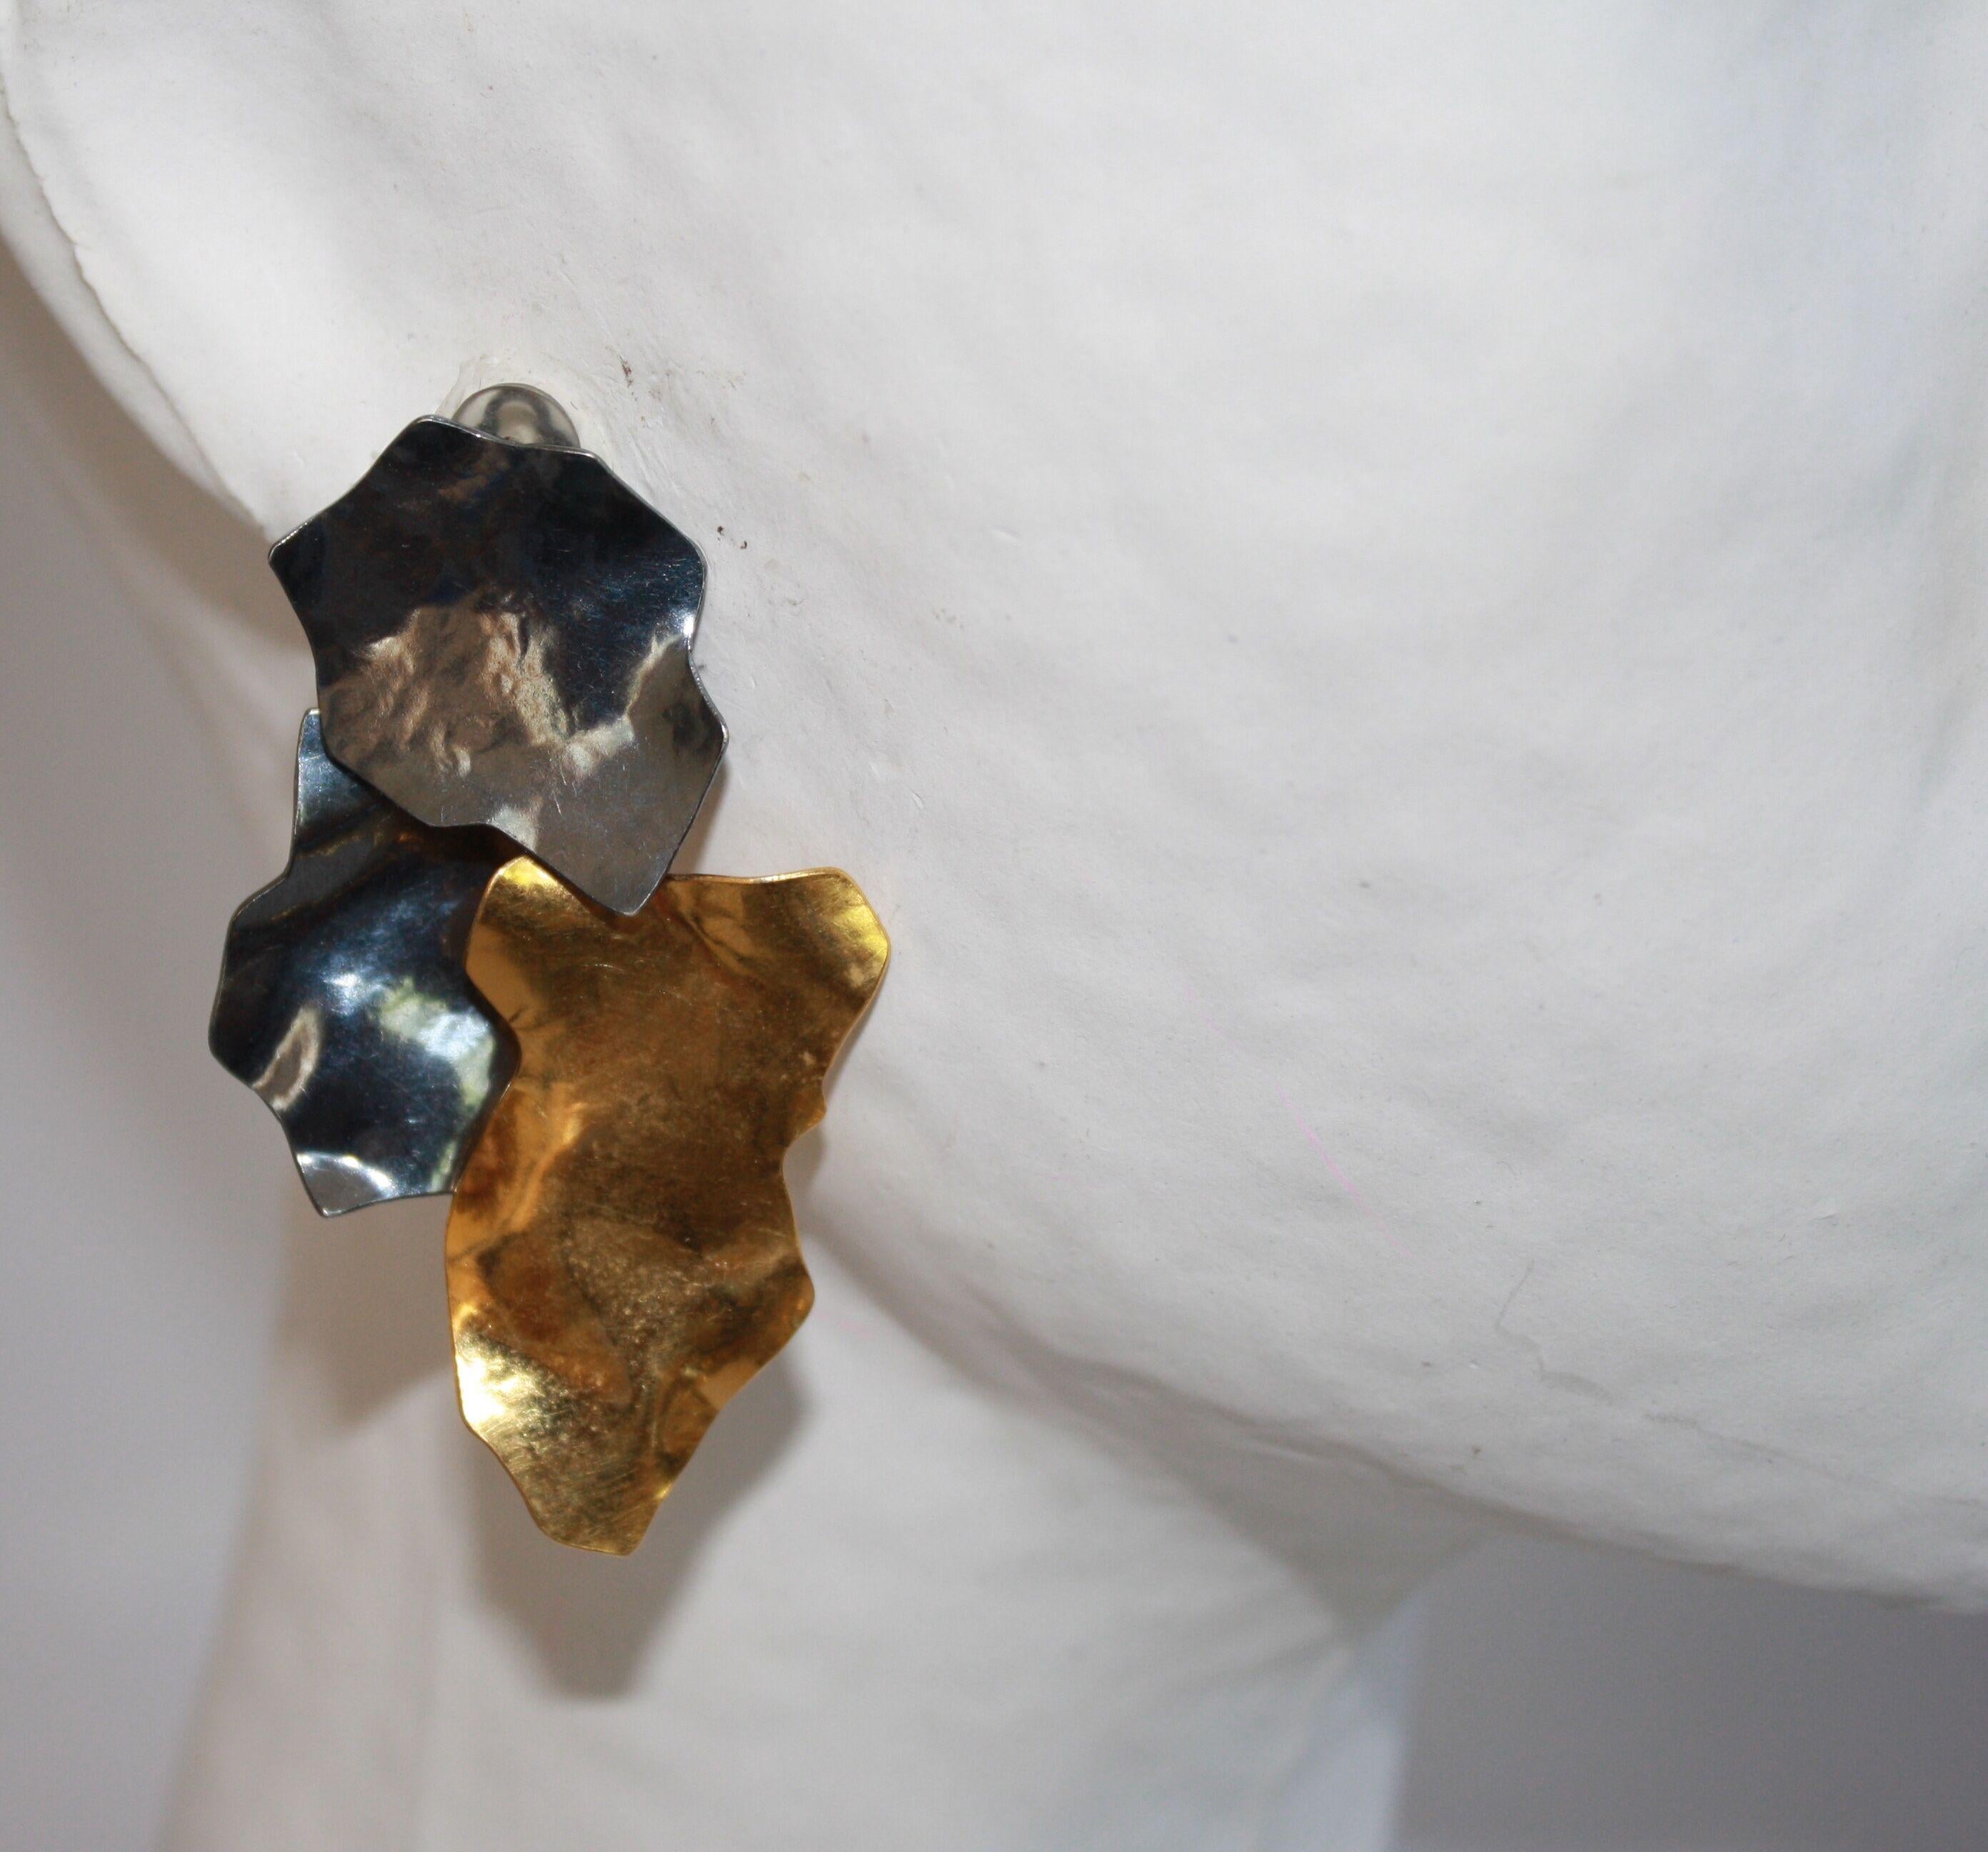 Ruthenium and gold plated brass clip earrings from Herve van der Straeten. 